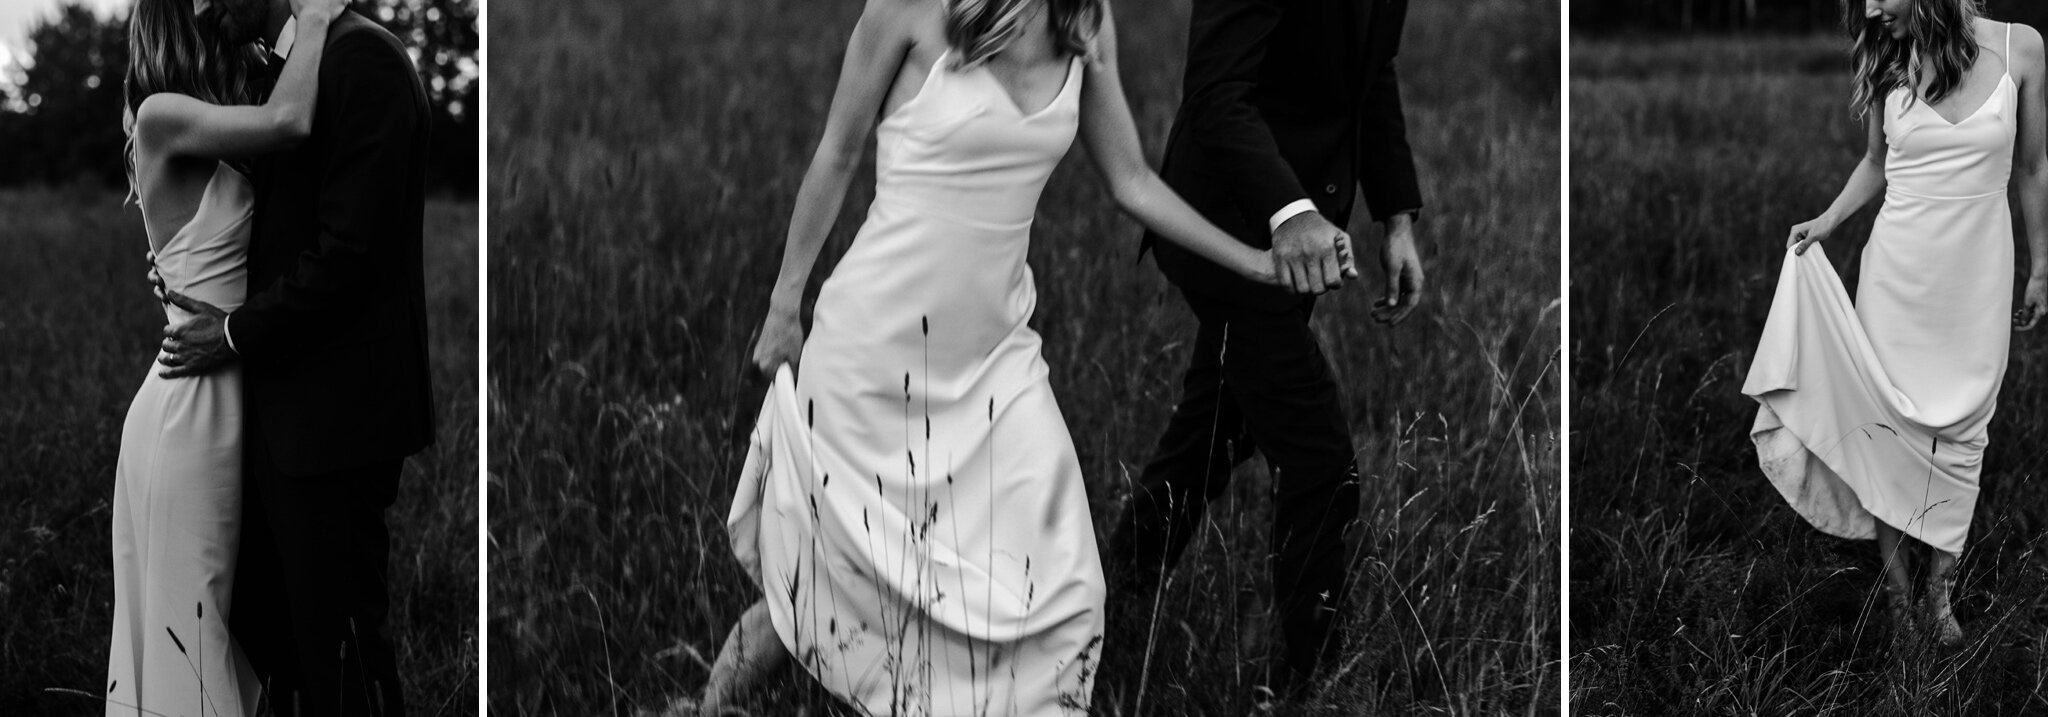 084-bride-groom-wedding-photos-in-field-at-sunset-toronto-romantic-black-white.jpg